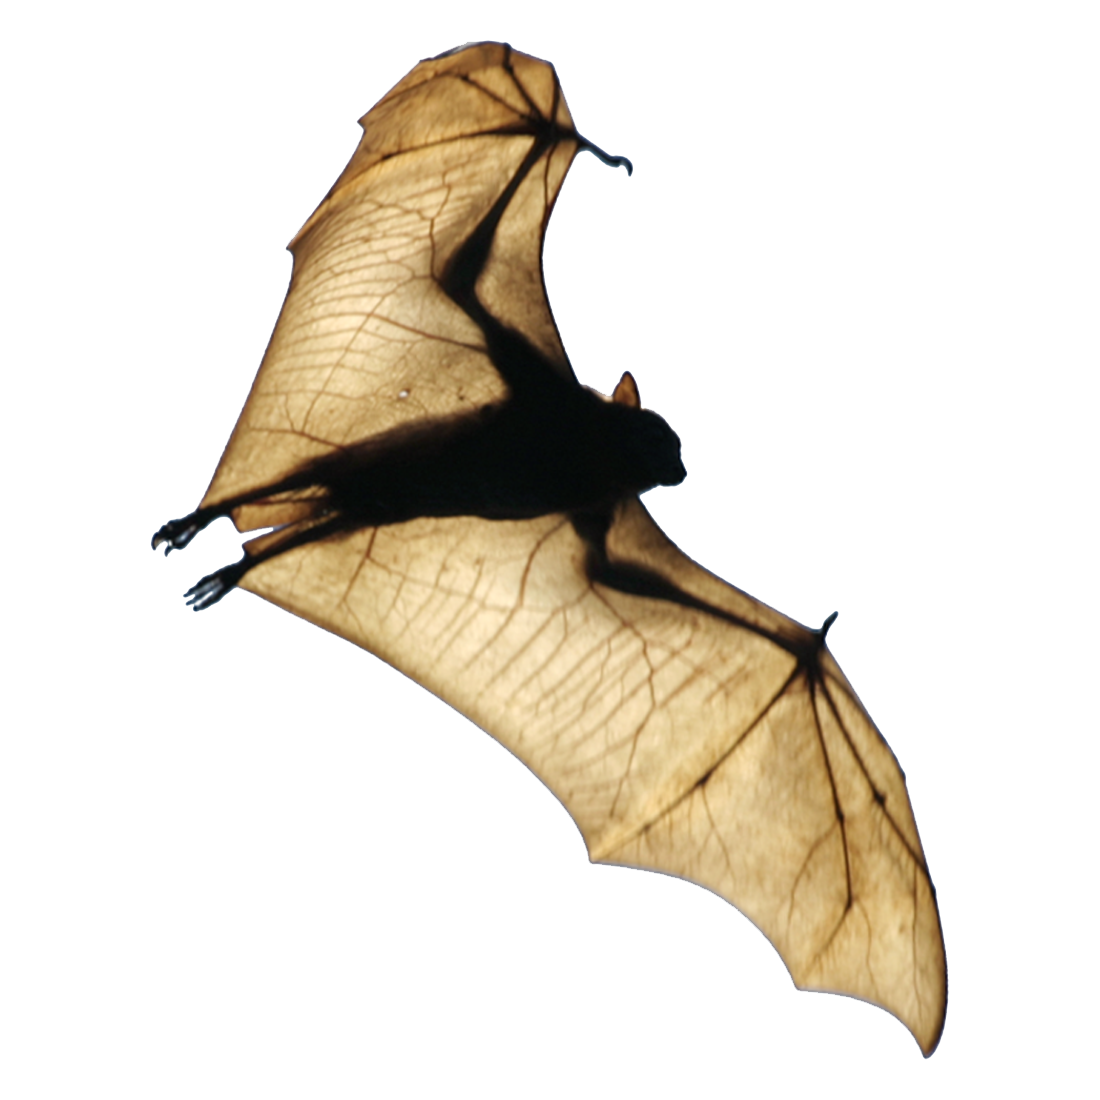 Fruit Bat Transparent Image